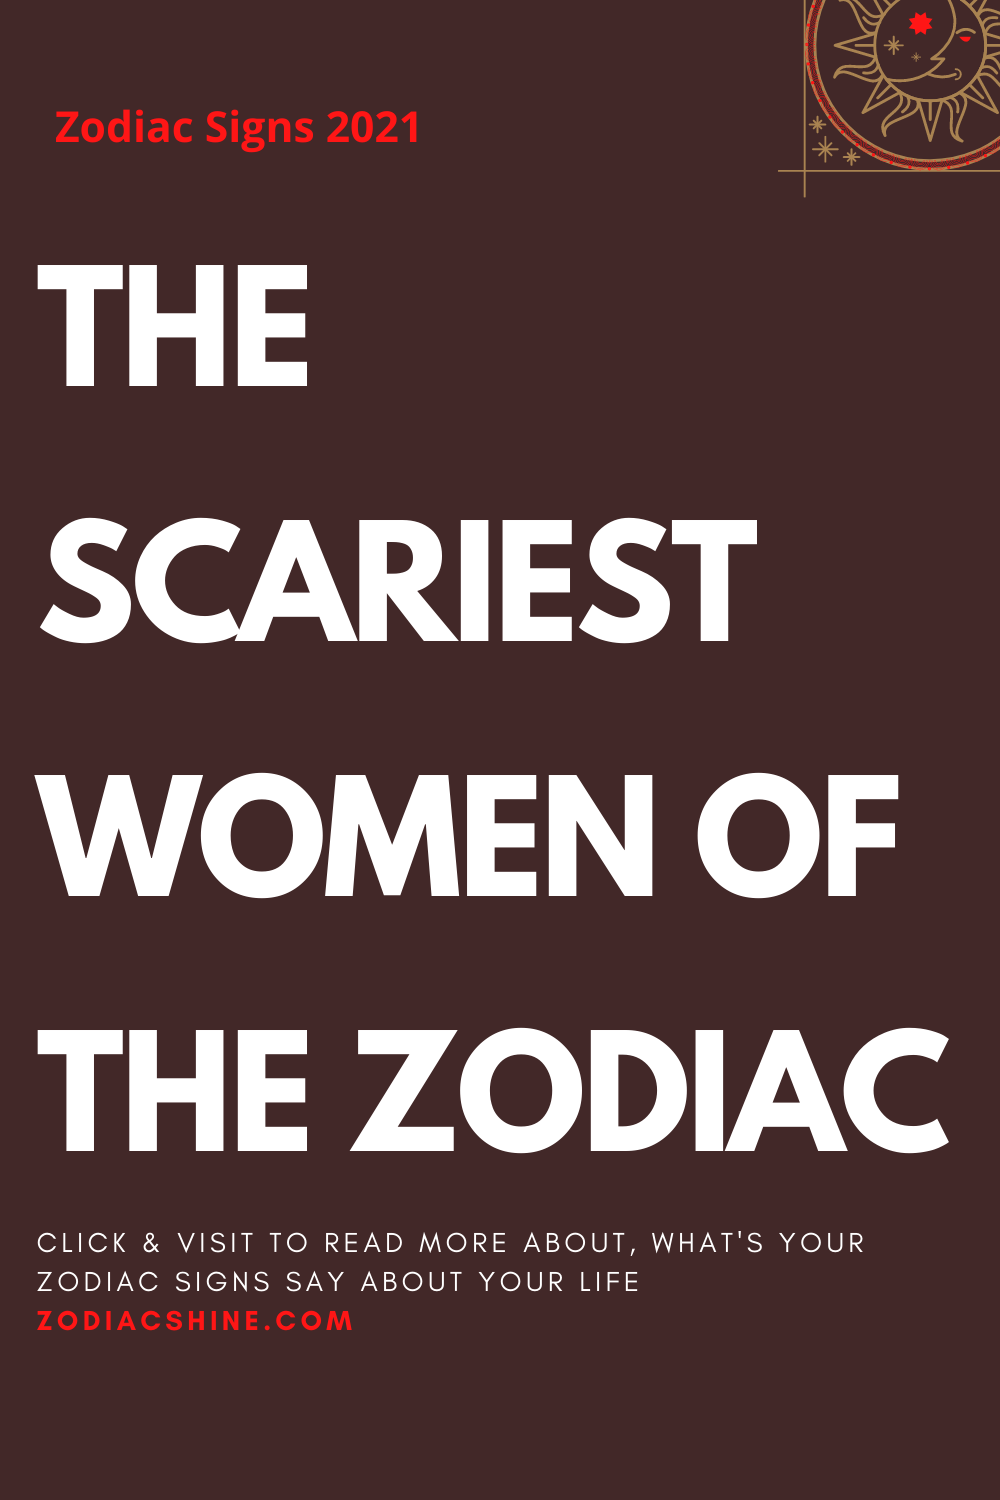 THE SCARIEST WOMEN OF THE ZODIAC